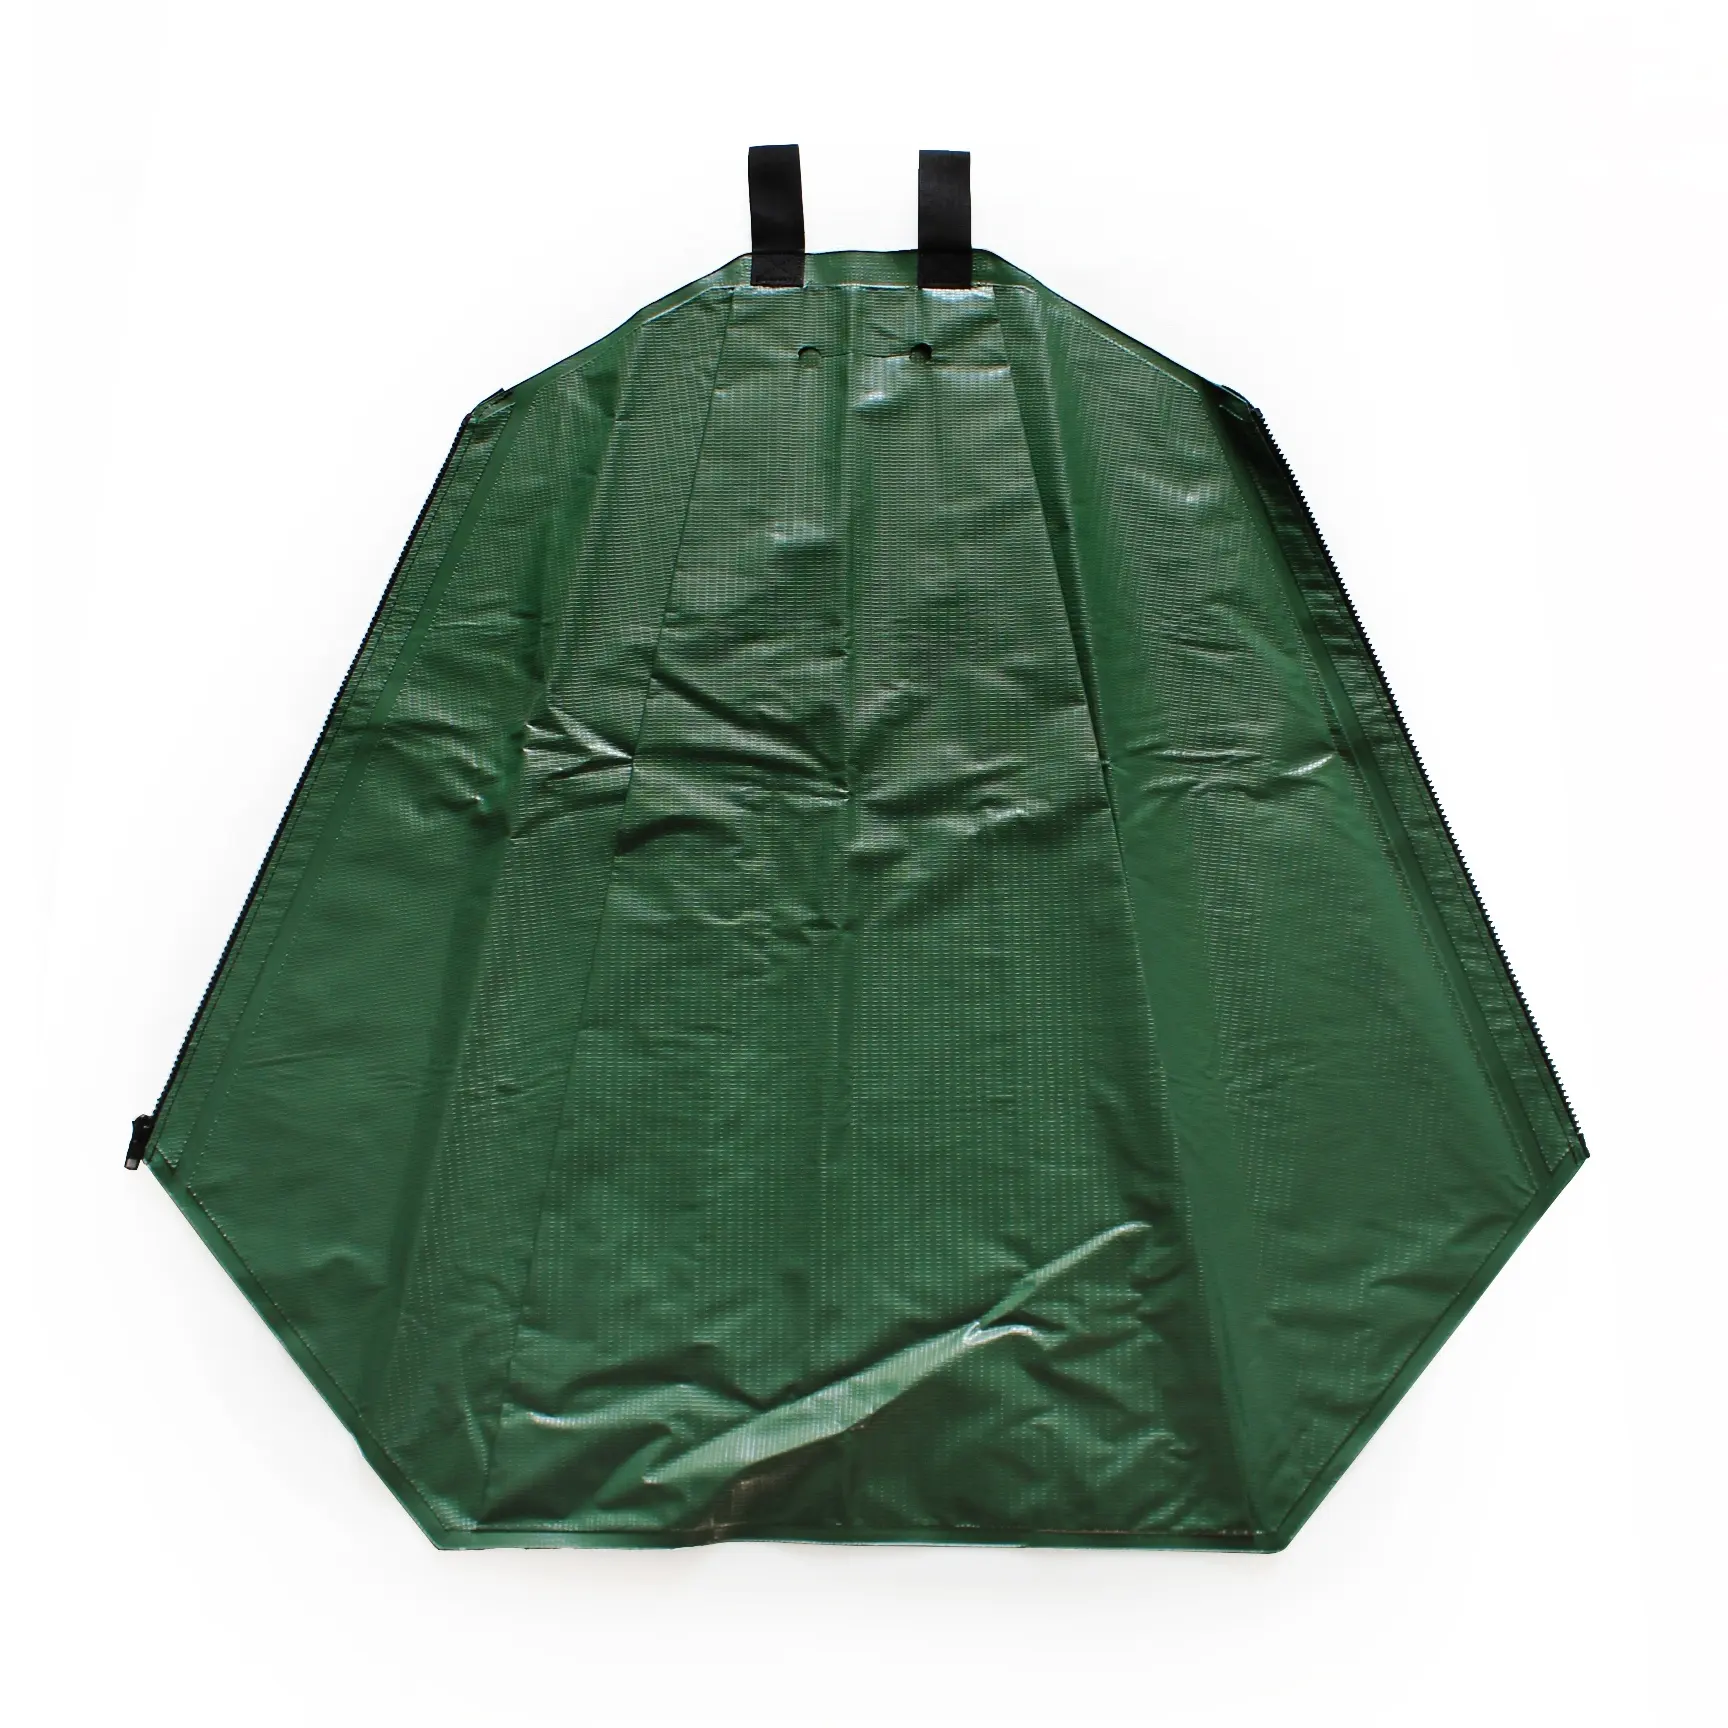 Cheap price 20 gallon PVC tarpaulin slow drop irrigation watering bag for trees